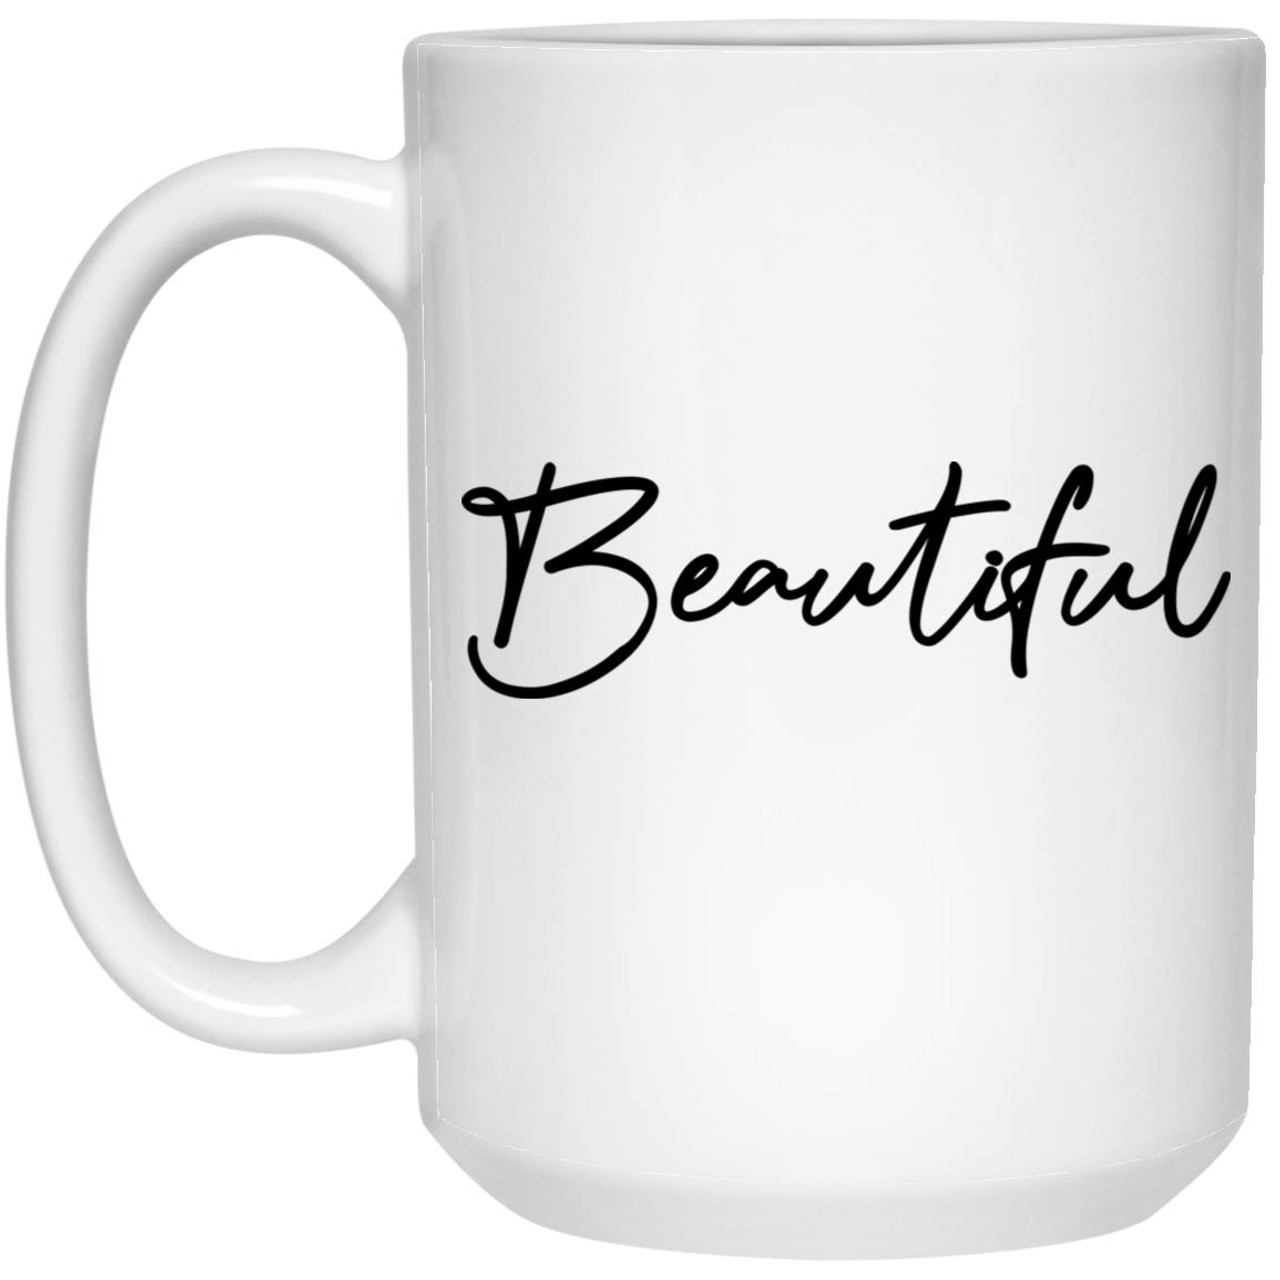 Beautiful 21504 15 oz. White Mug